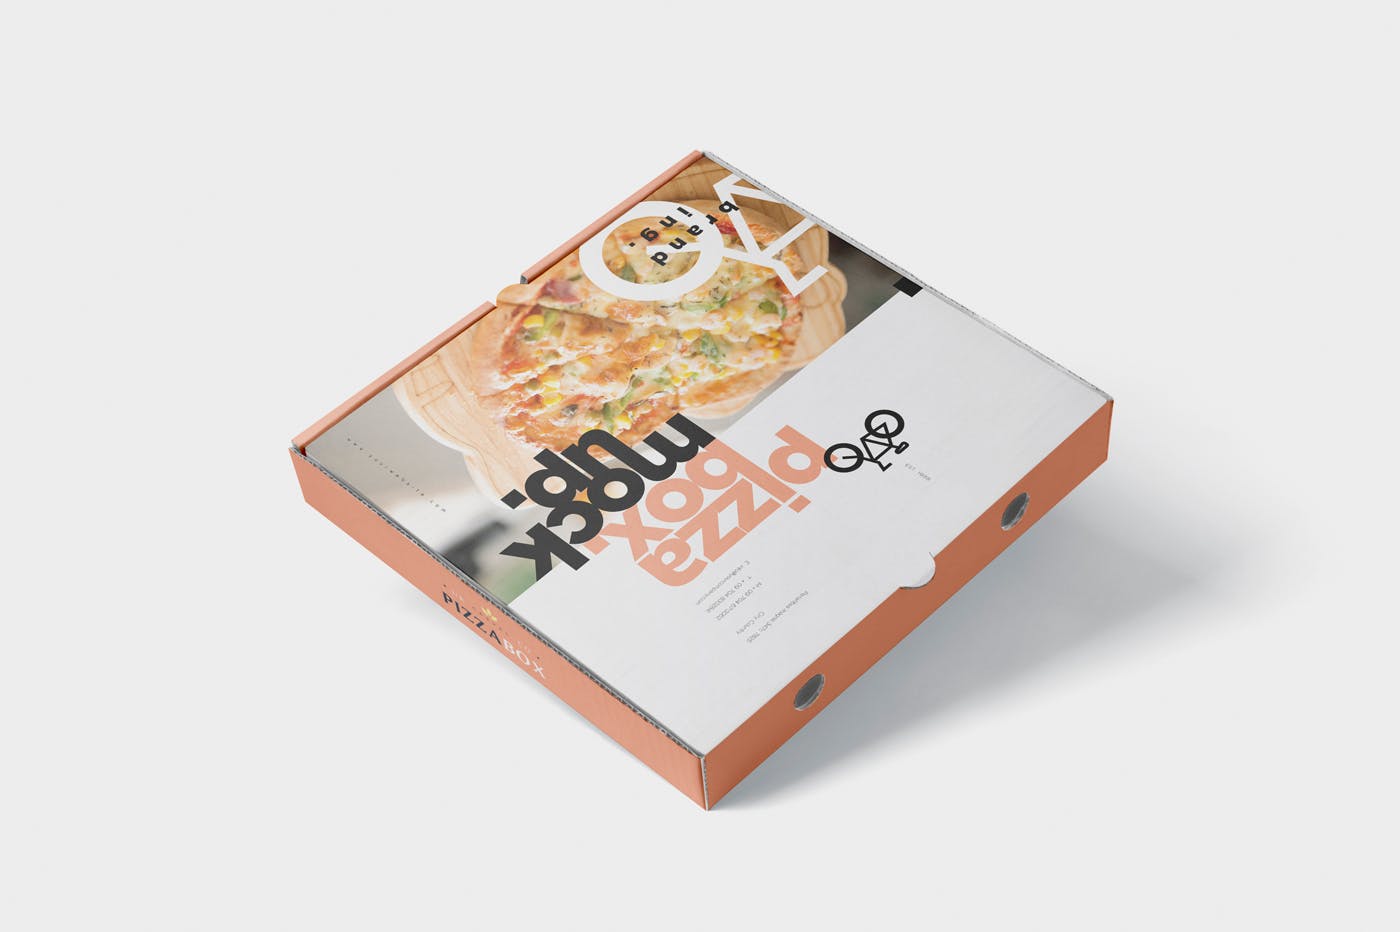 披萨外带包装纸盒设计图样机 Pizza Box Mock-Up – Grocery Store Edition插图(2)